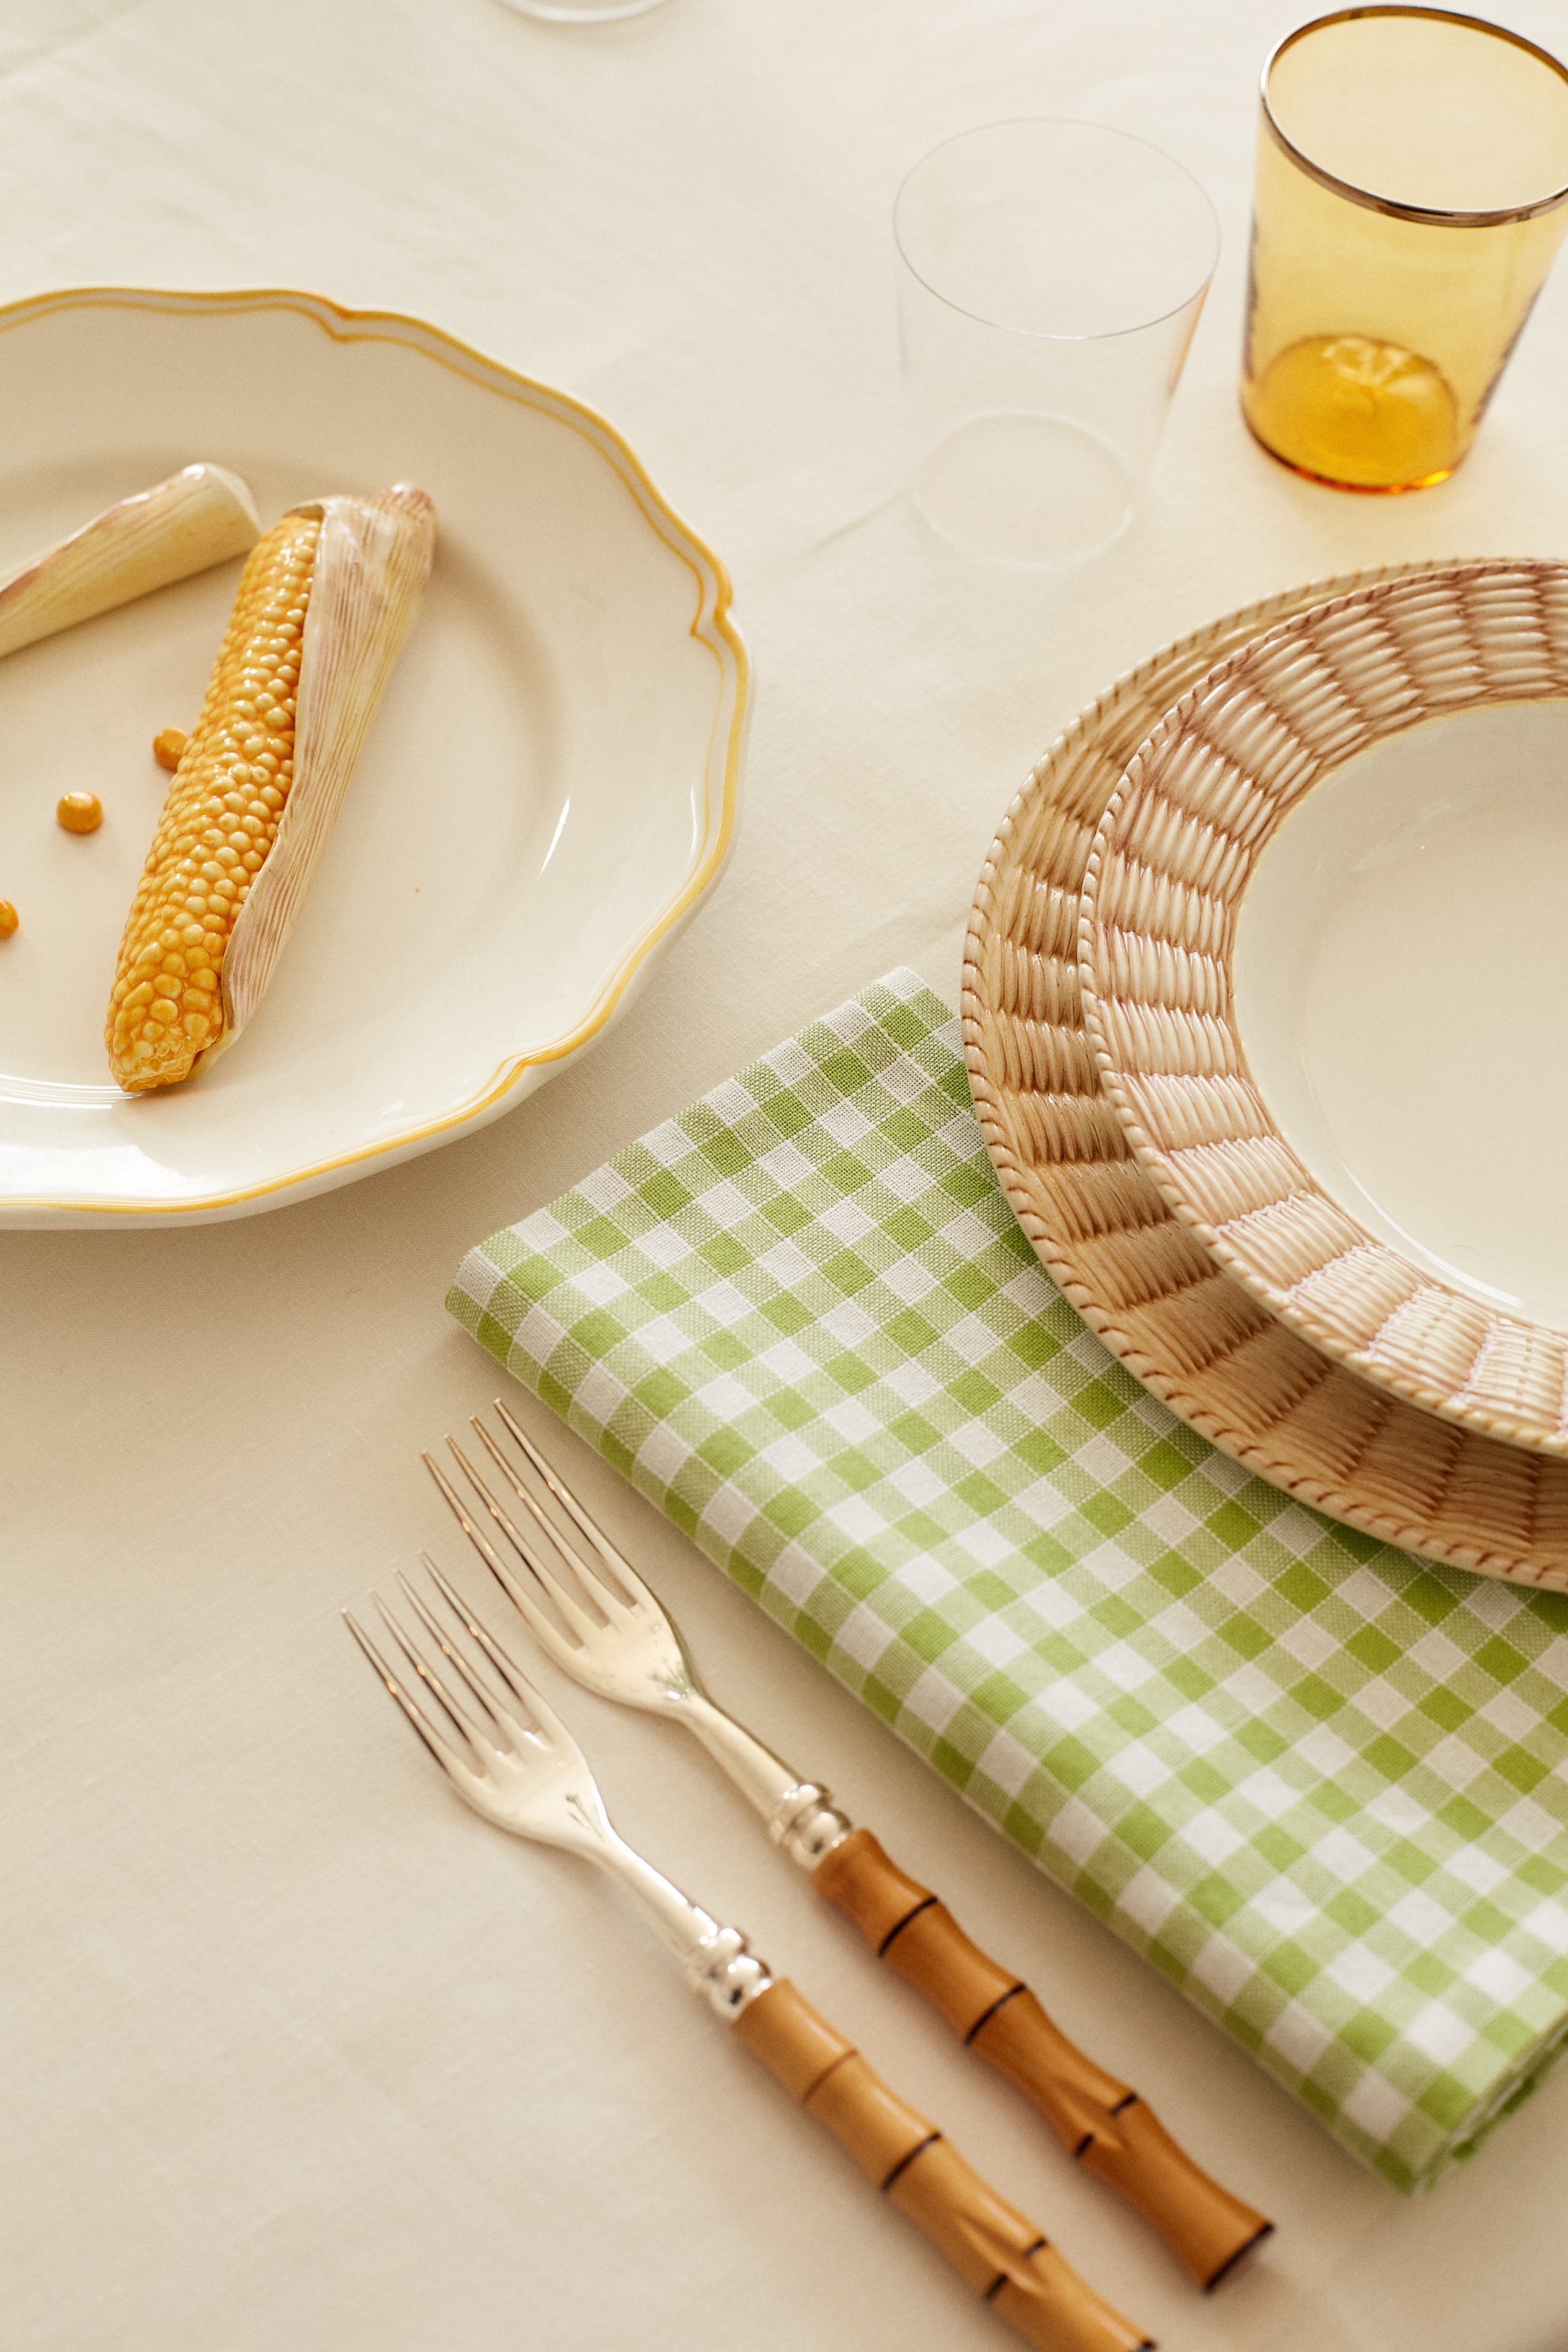 Table Setting with Trompe L’œil Corn Décorative Plate